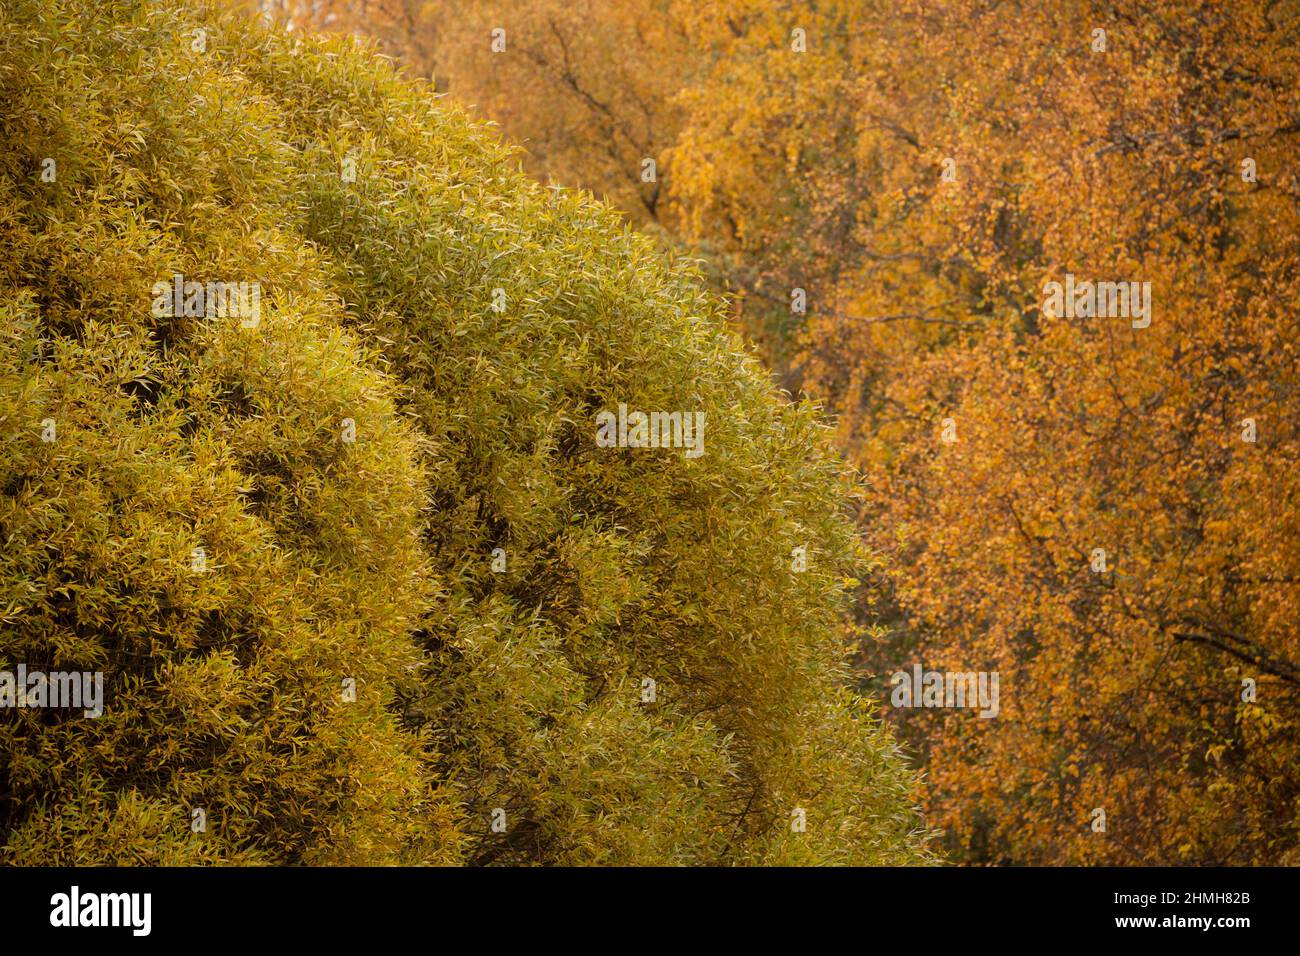 Salix fragilis Bullata, deciduous trees in autumn colored leaves, Finland Stock Photo